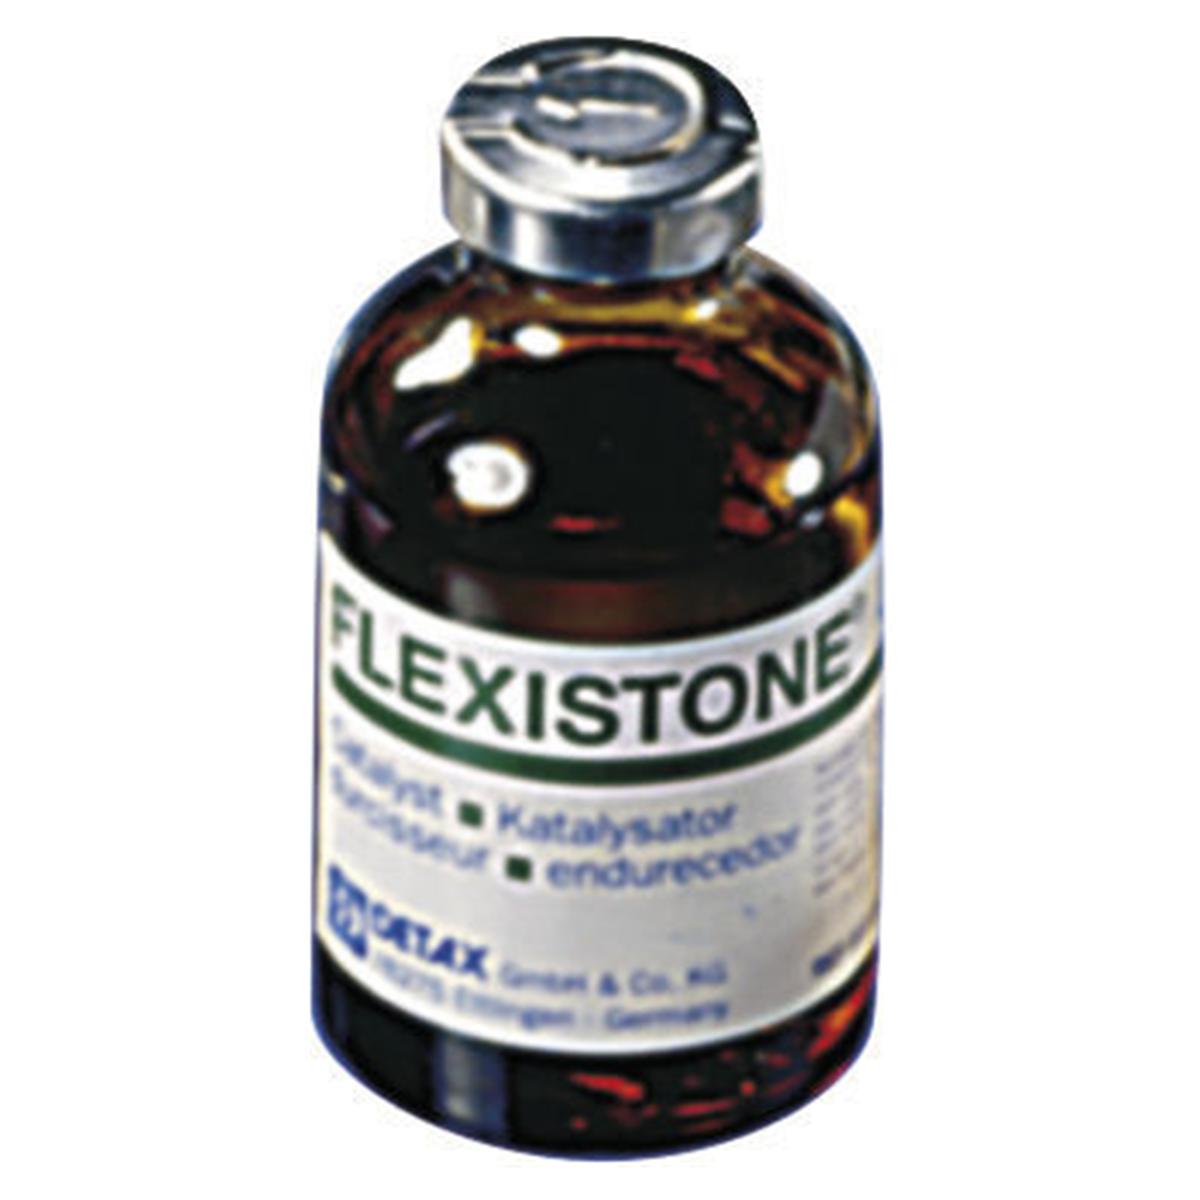 Flexistone - Katalysator - Flasche 30 ml